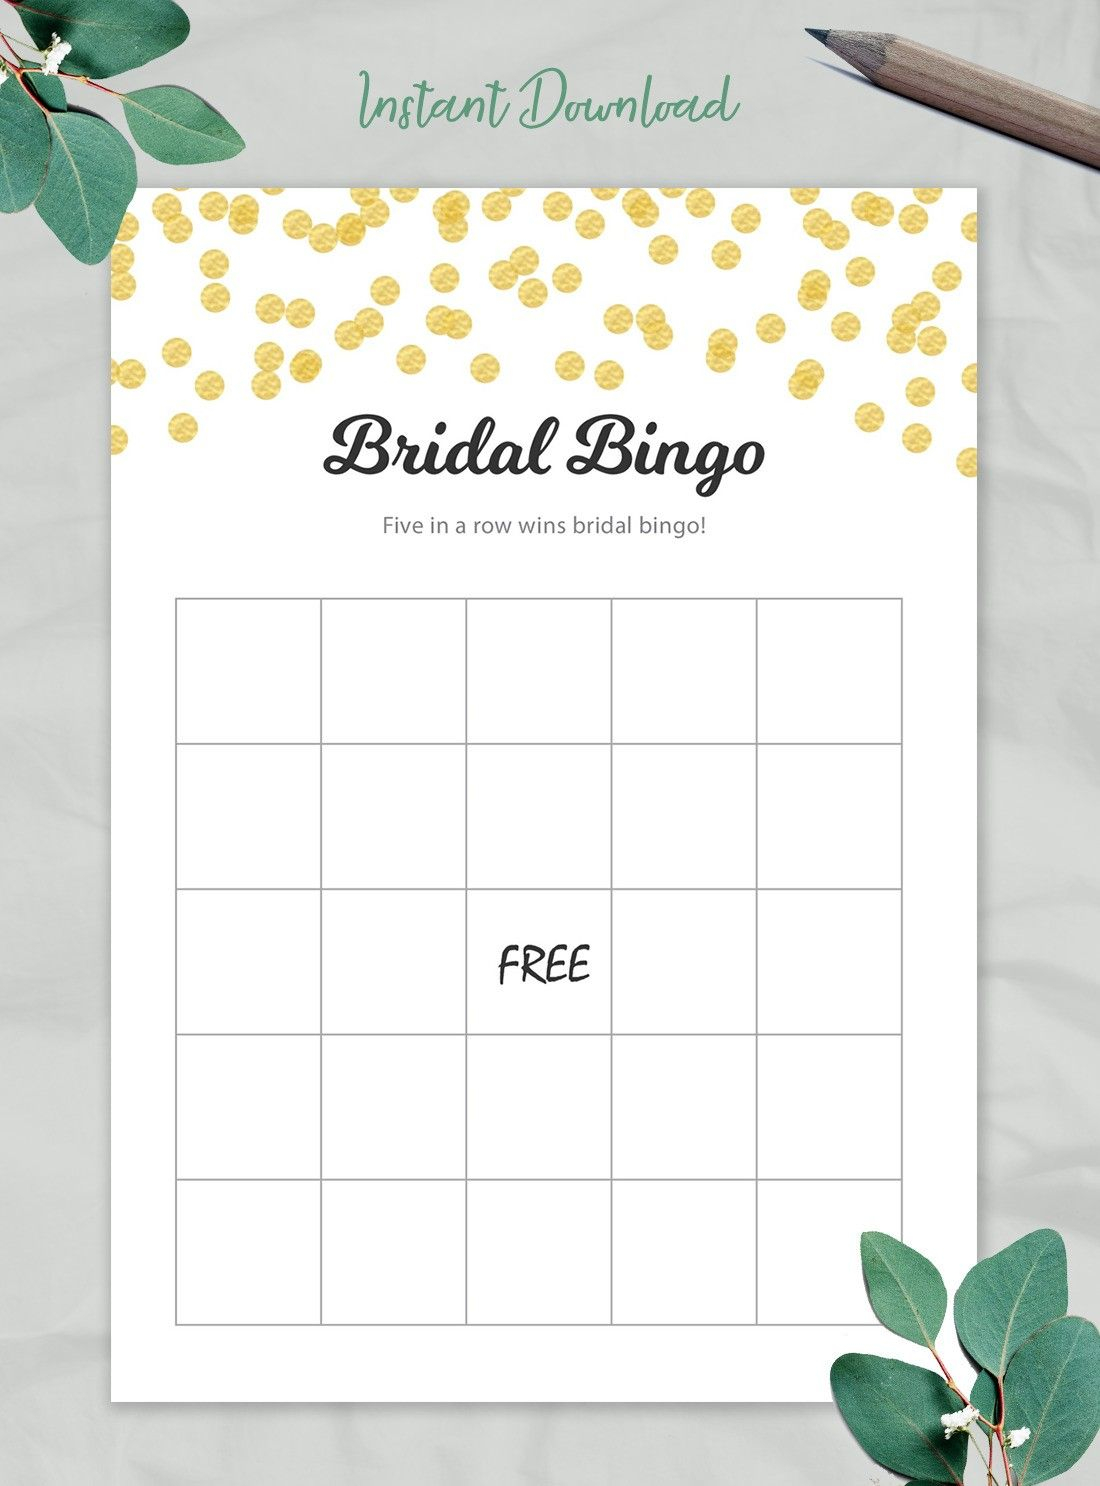 Blank Bridal Bingo Cards Template Empty Bingo Cards Etsy Bridal